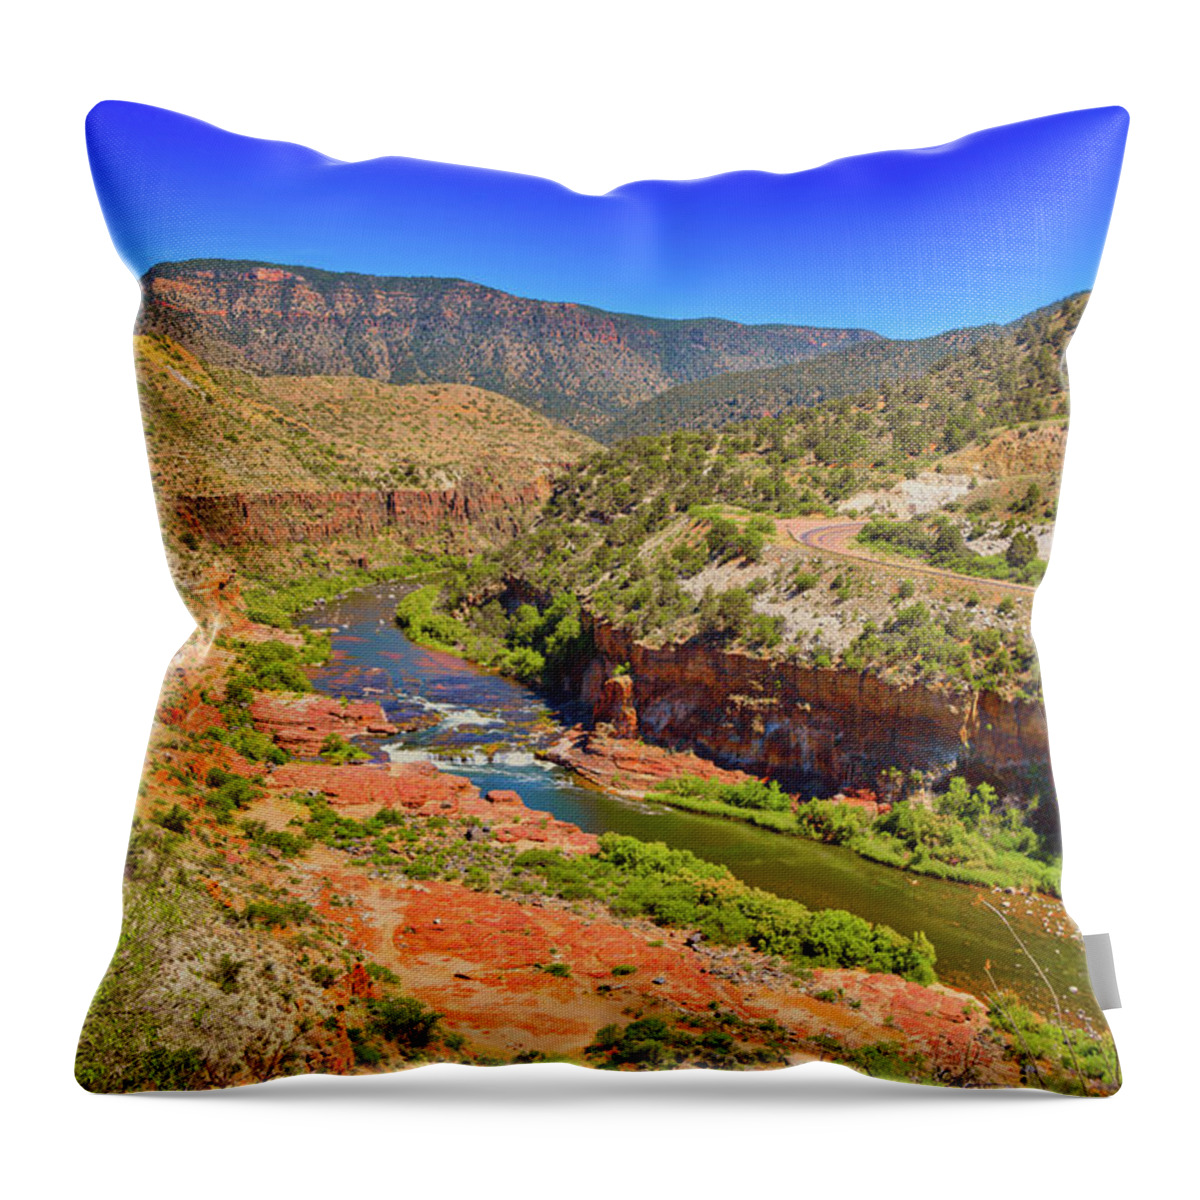 Arizona Throw Pillow featuring the photograph Salt River Canyon Rapids, Arizona by Chance Kafka